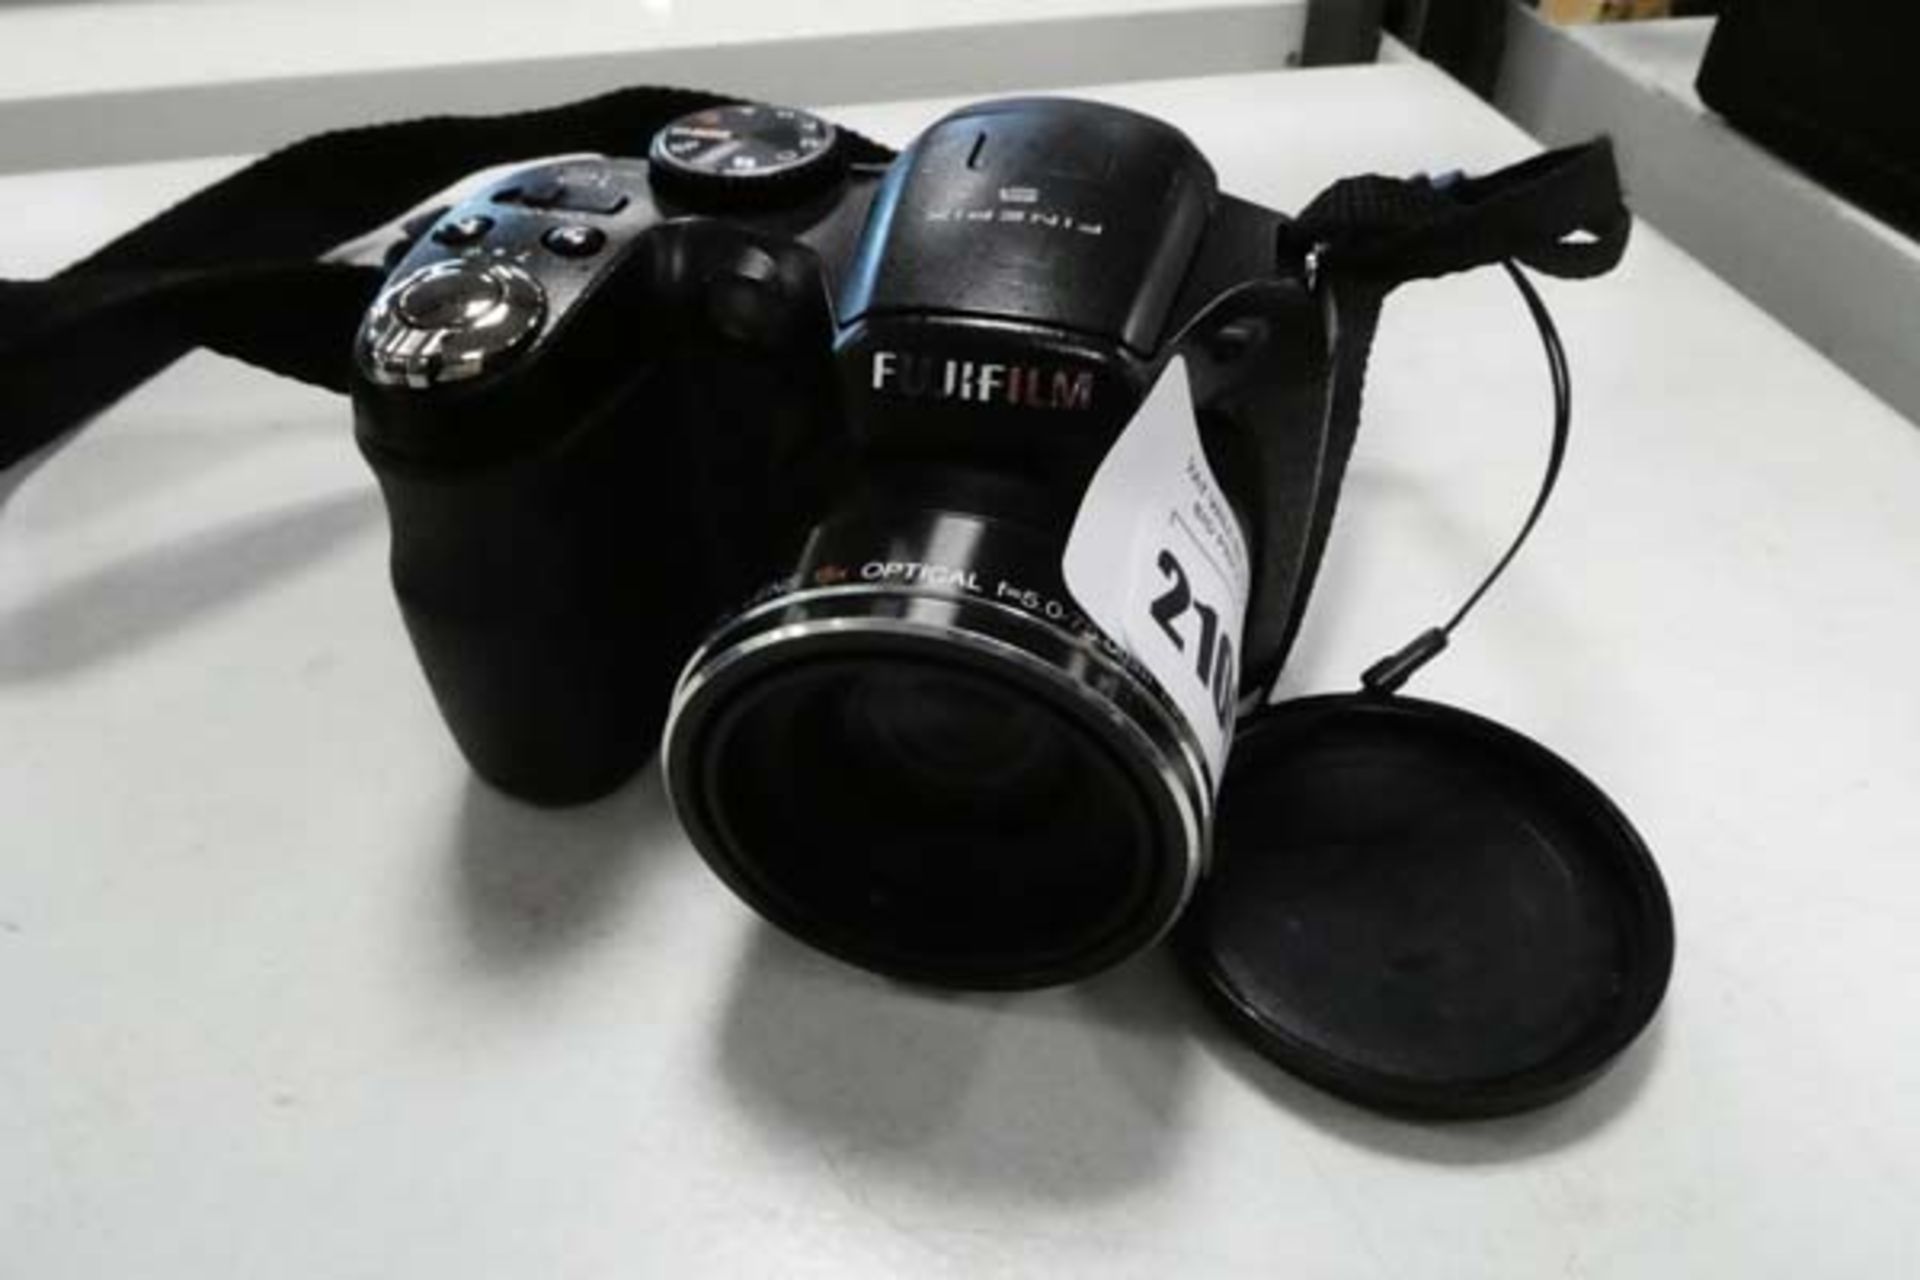 Fujifilm digital camera model S1730